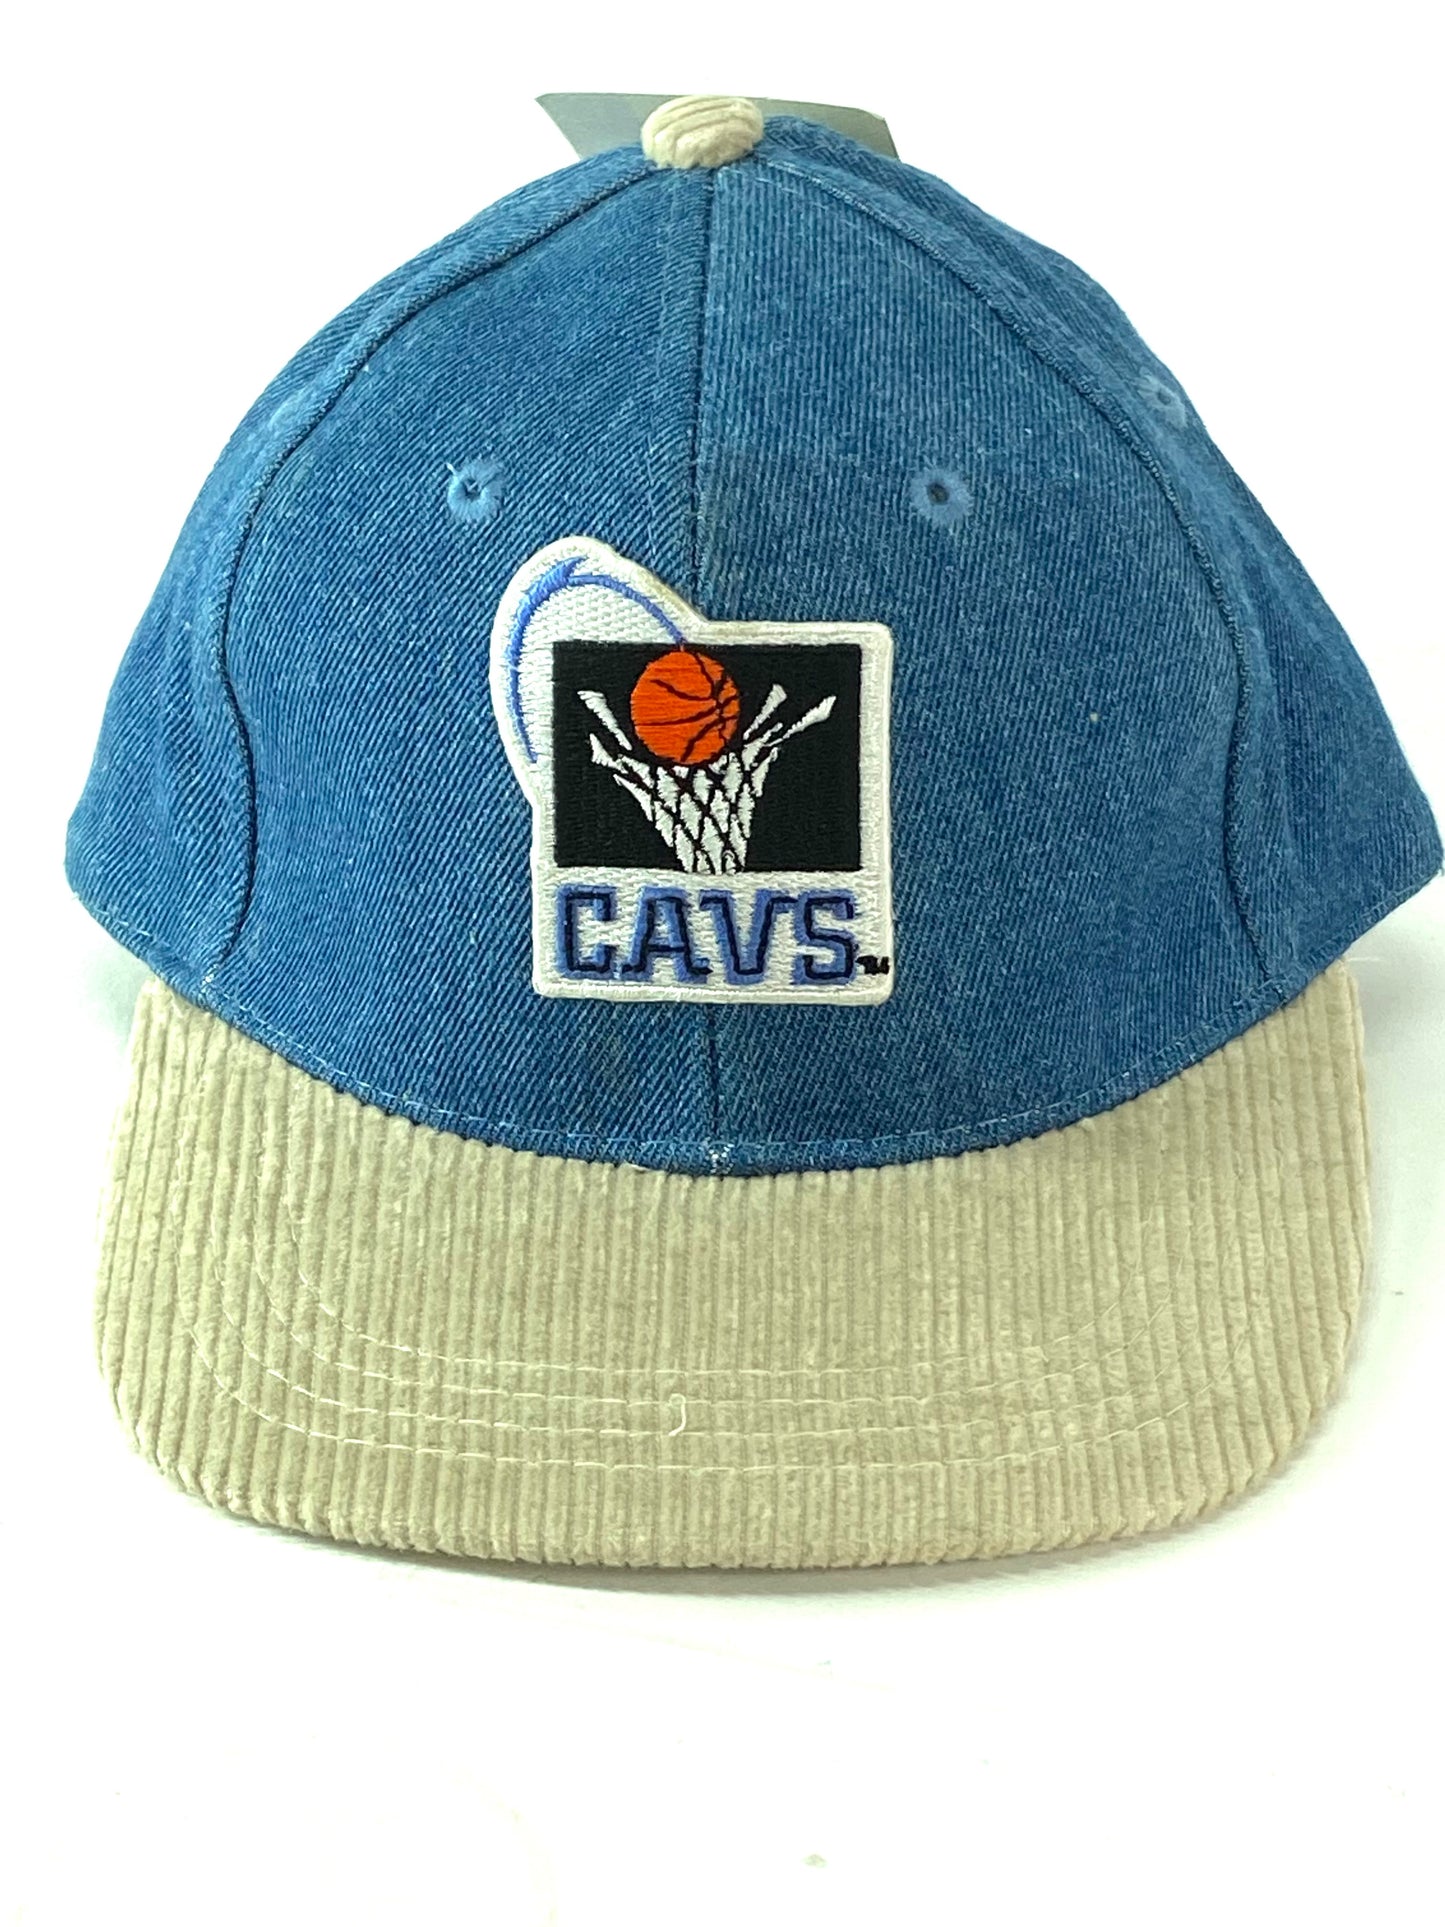 Cleveland Cavaliers Vintage NBA Old Logo Denim Juvenile Hat By DPM